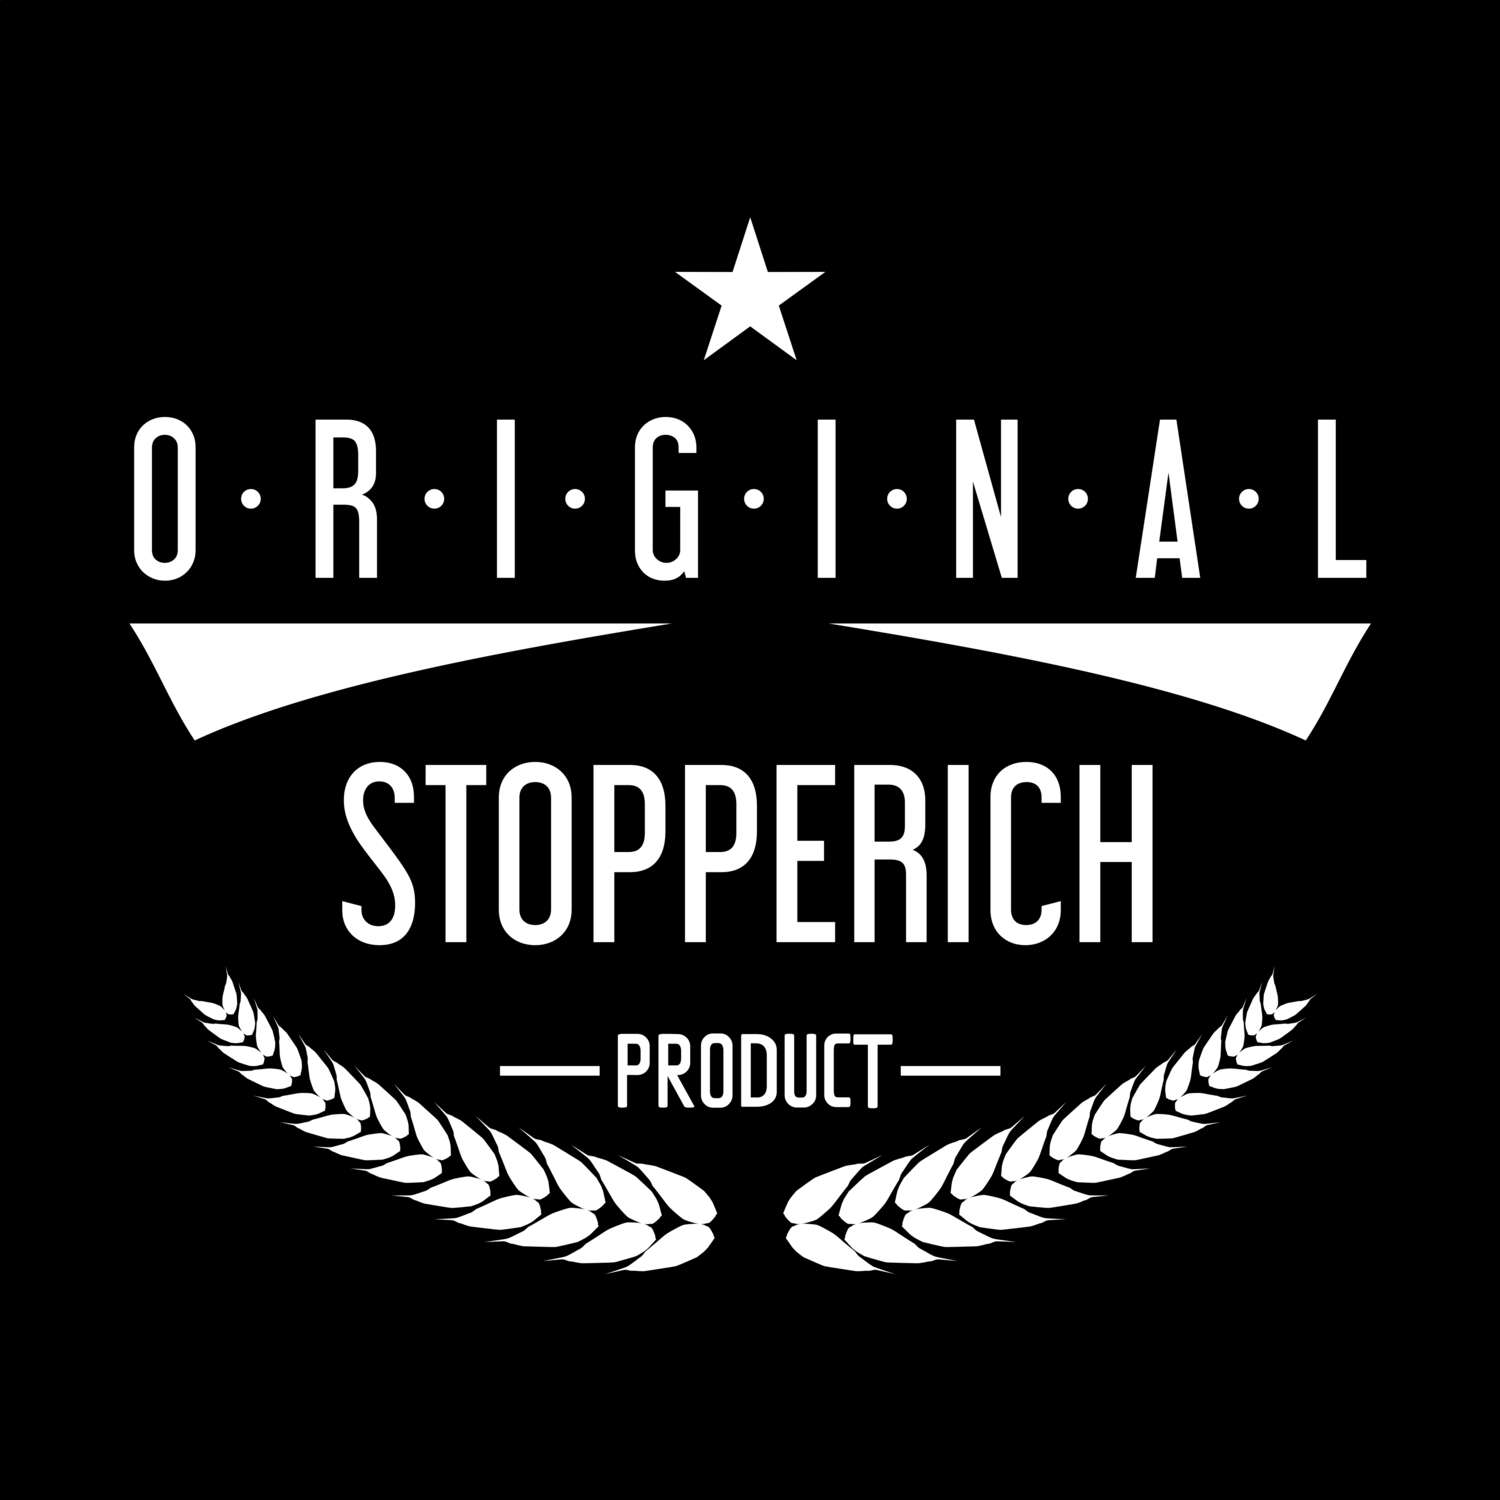 Stopperich T-Shirt »Original Product«